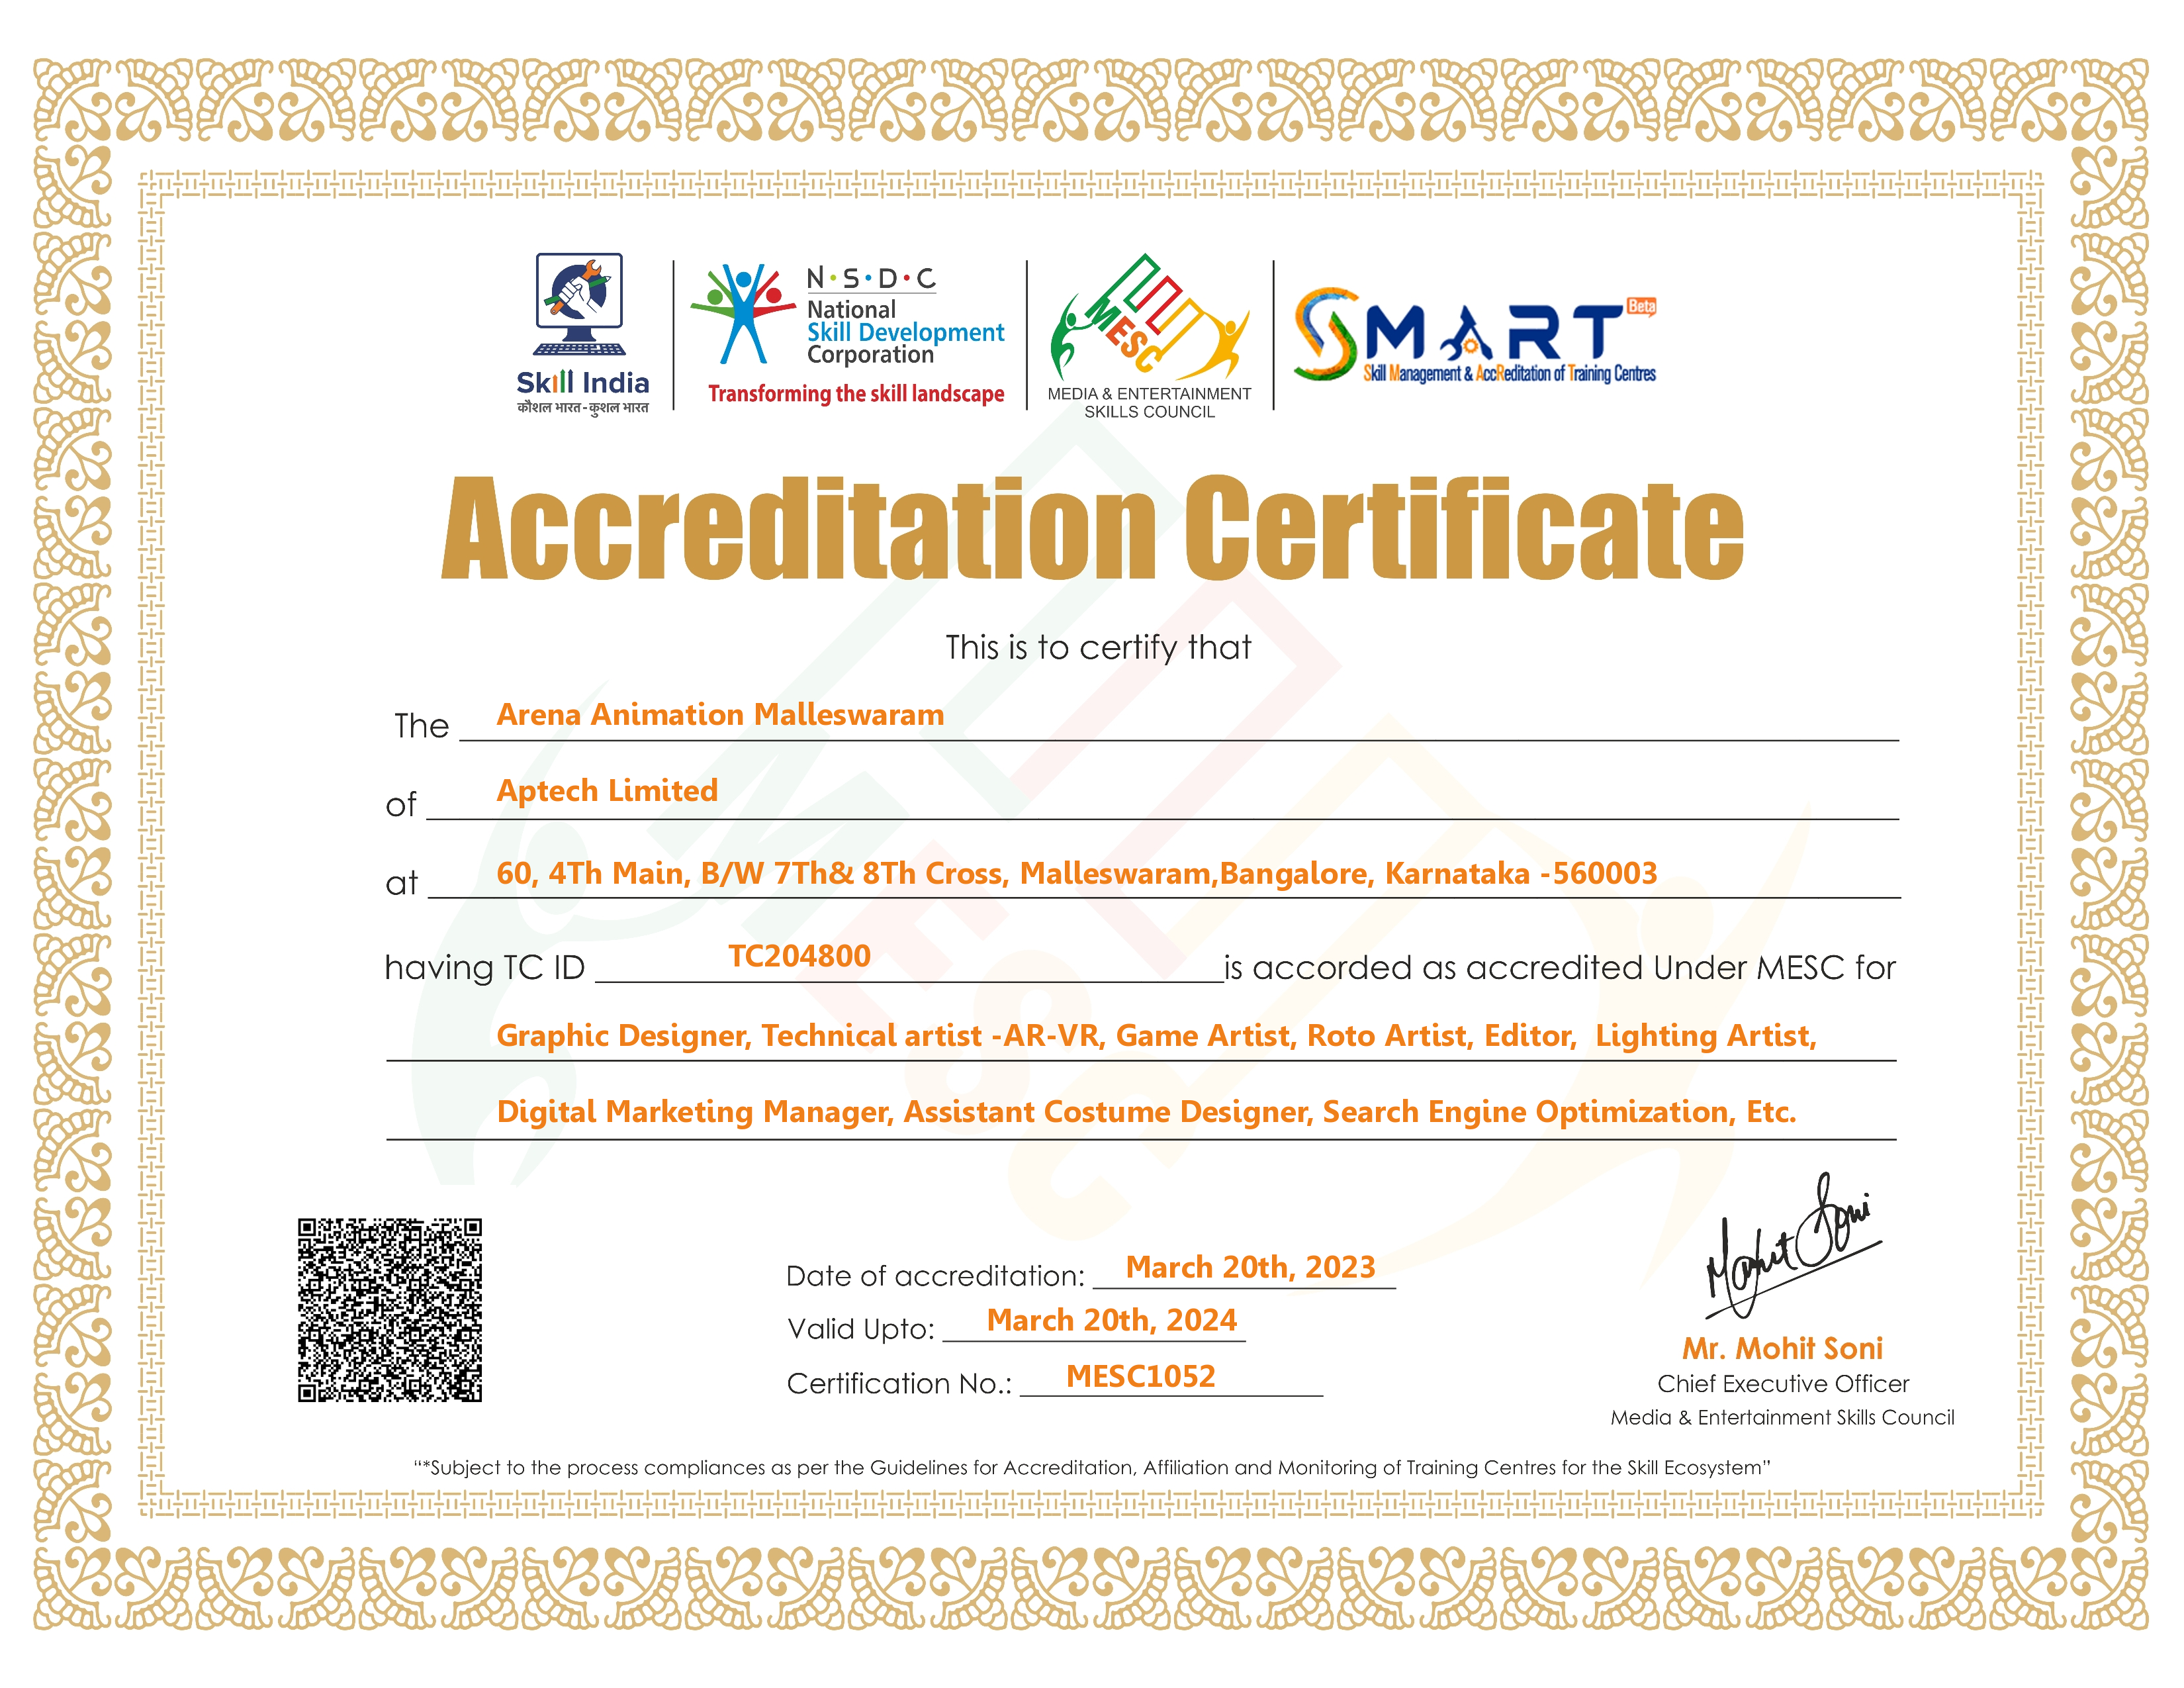 Arena Animation Malleswaram - MESC Certificate